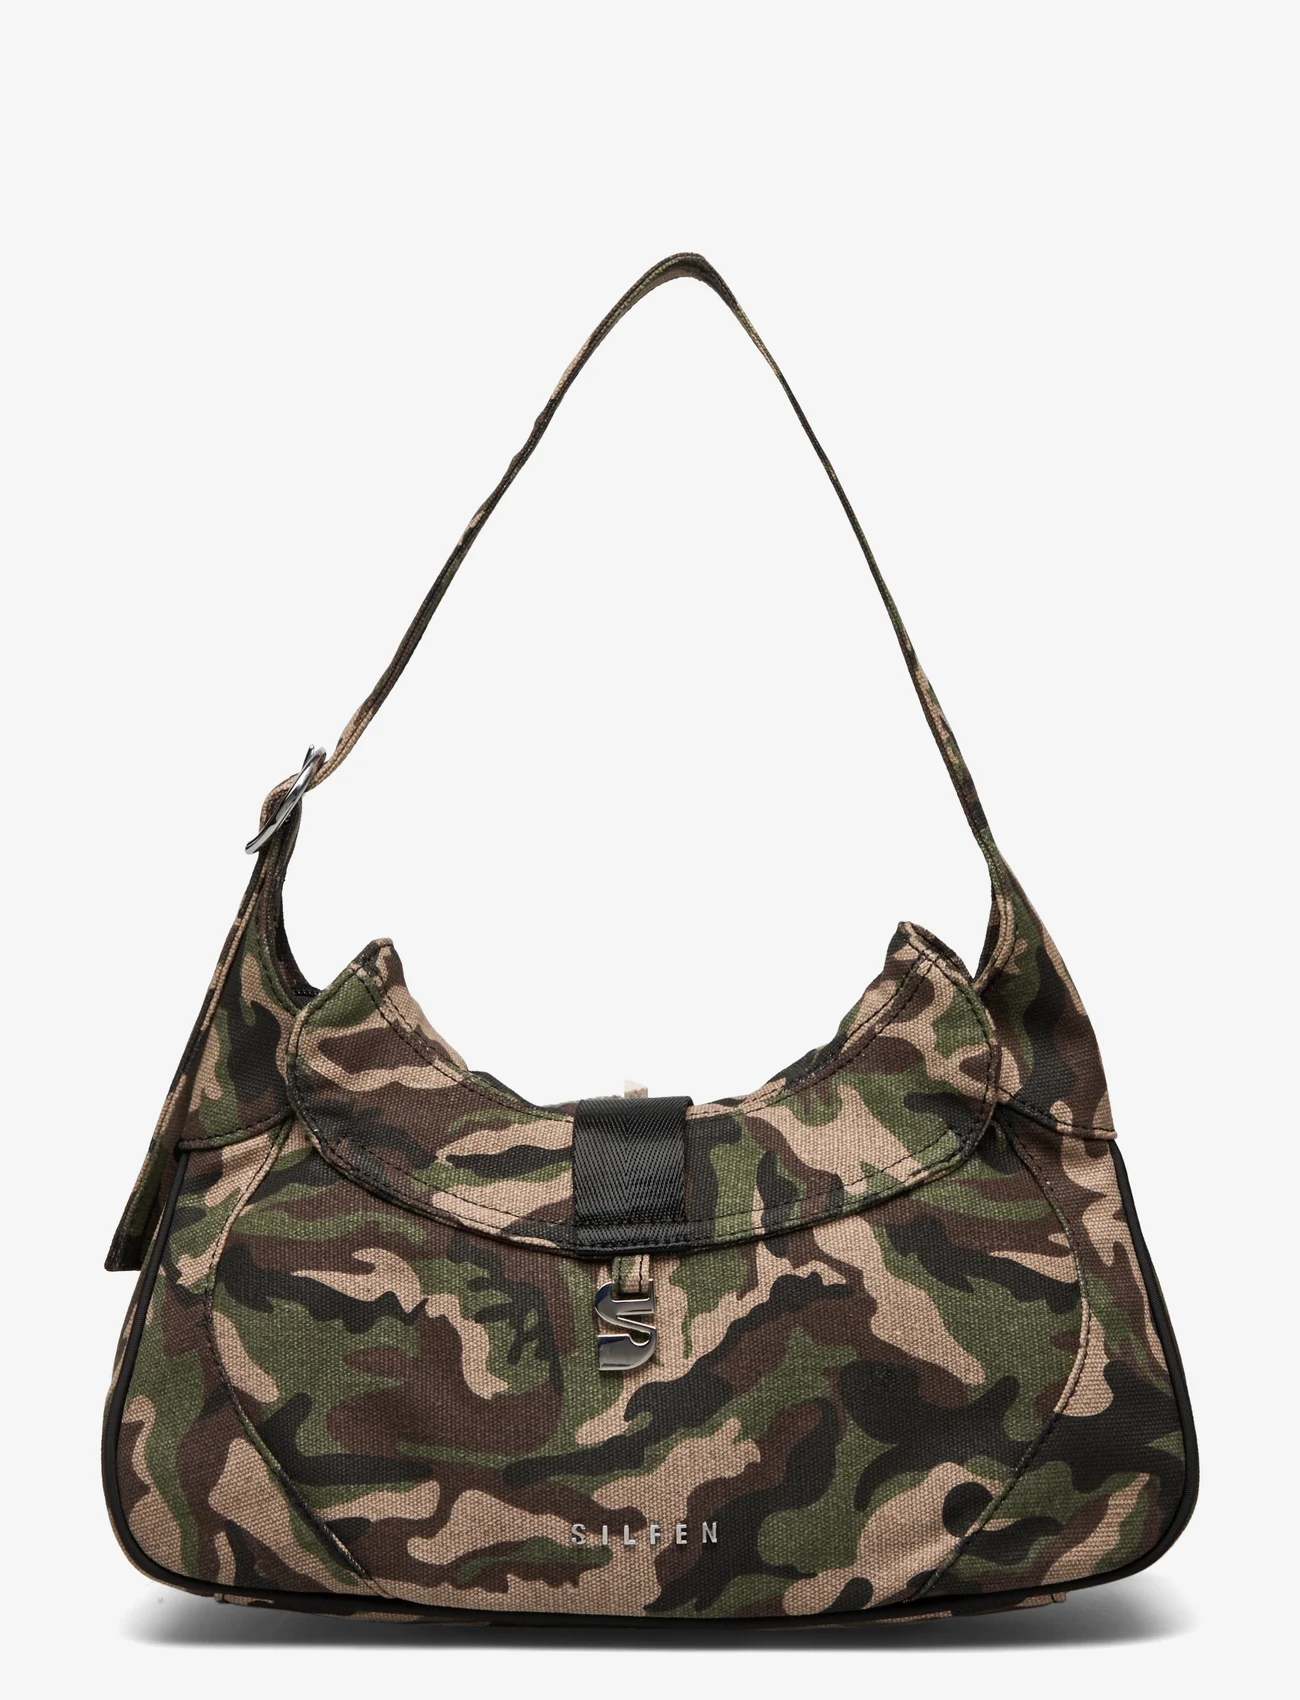 Silfen - Thea Shoulder Bag - feestelijke kleding voor outlet-prijzen - natural camouflage - 1